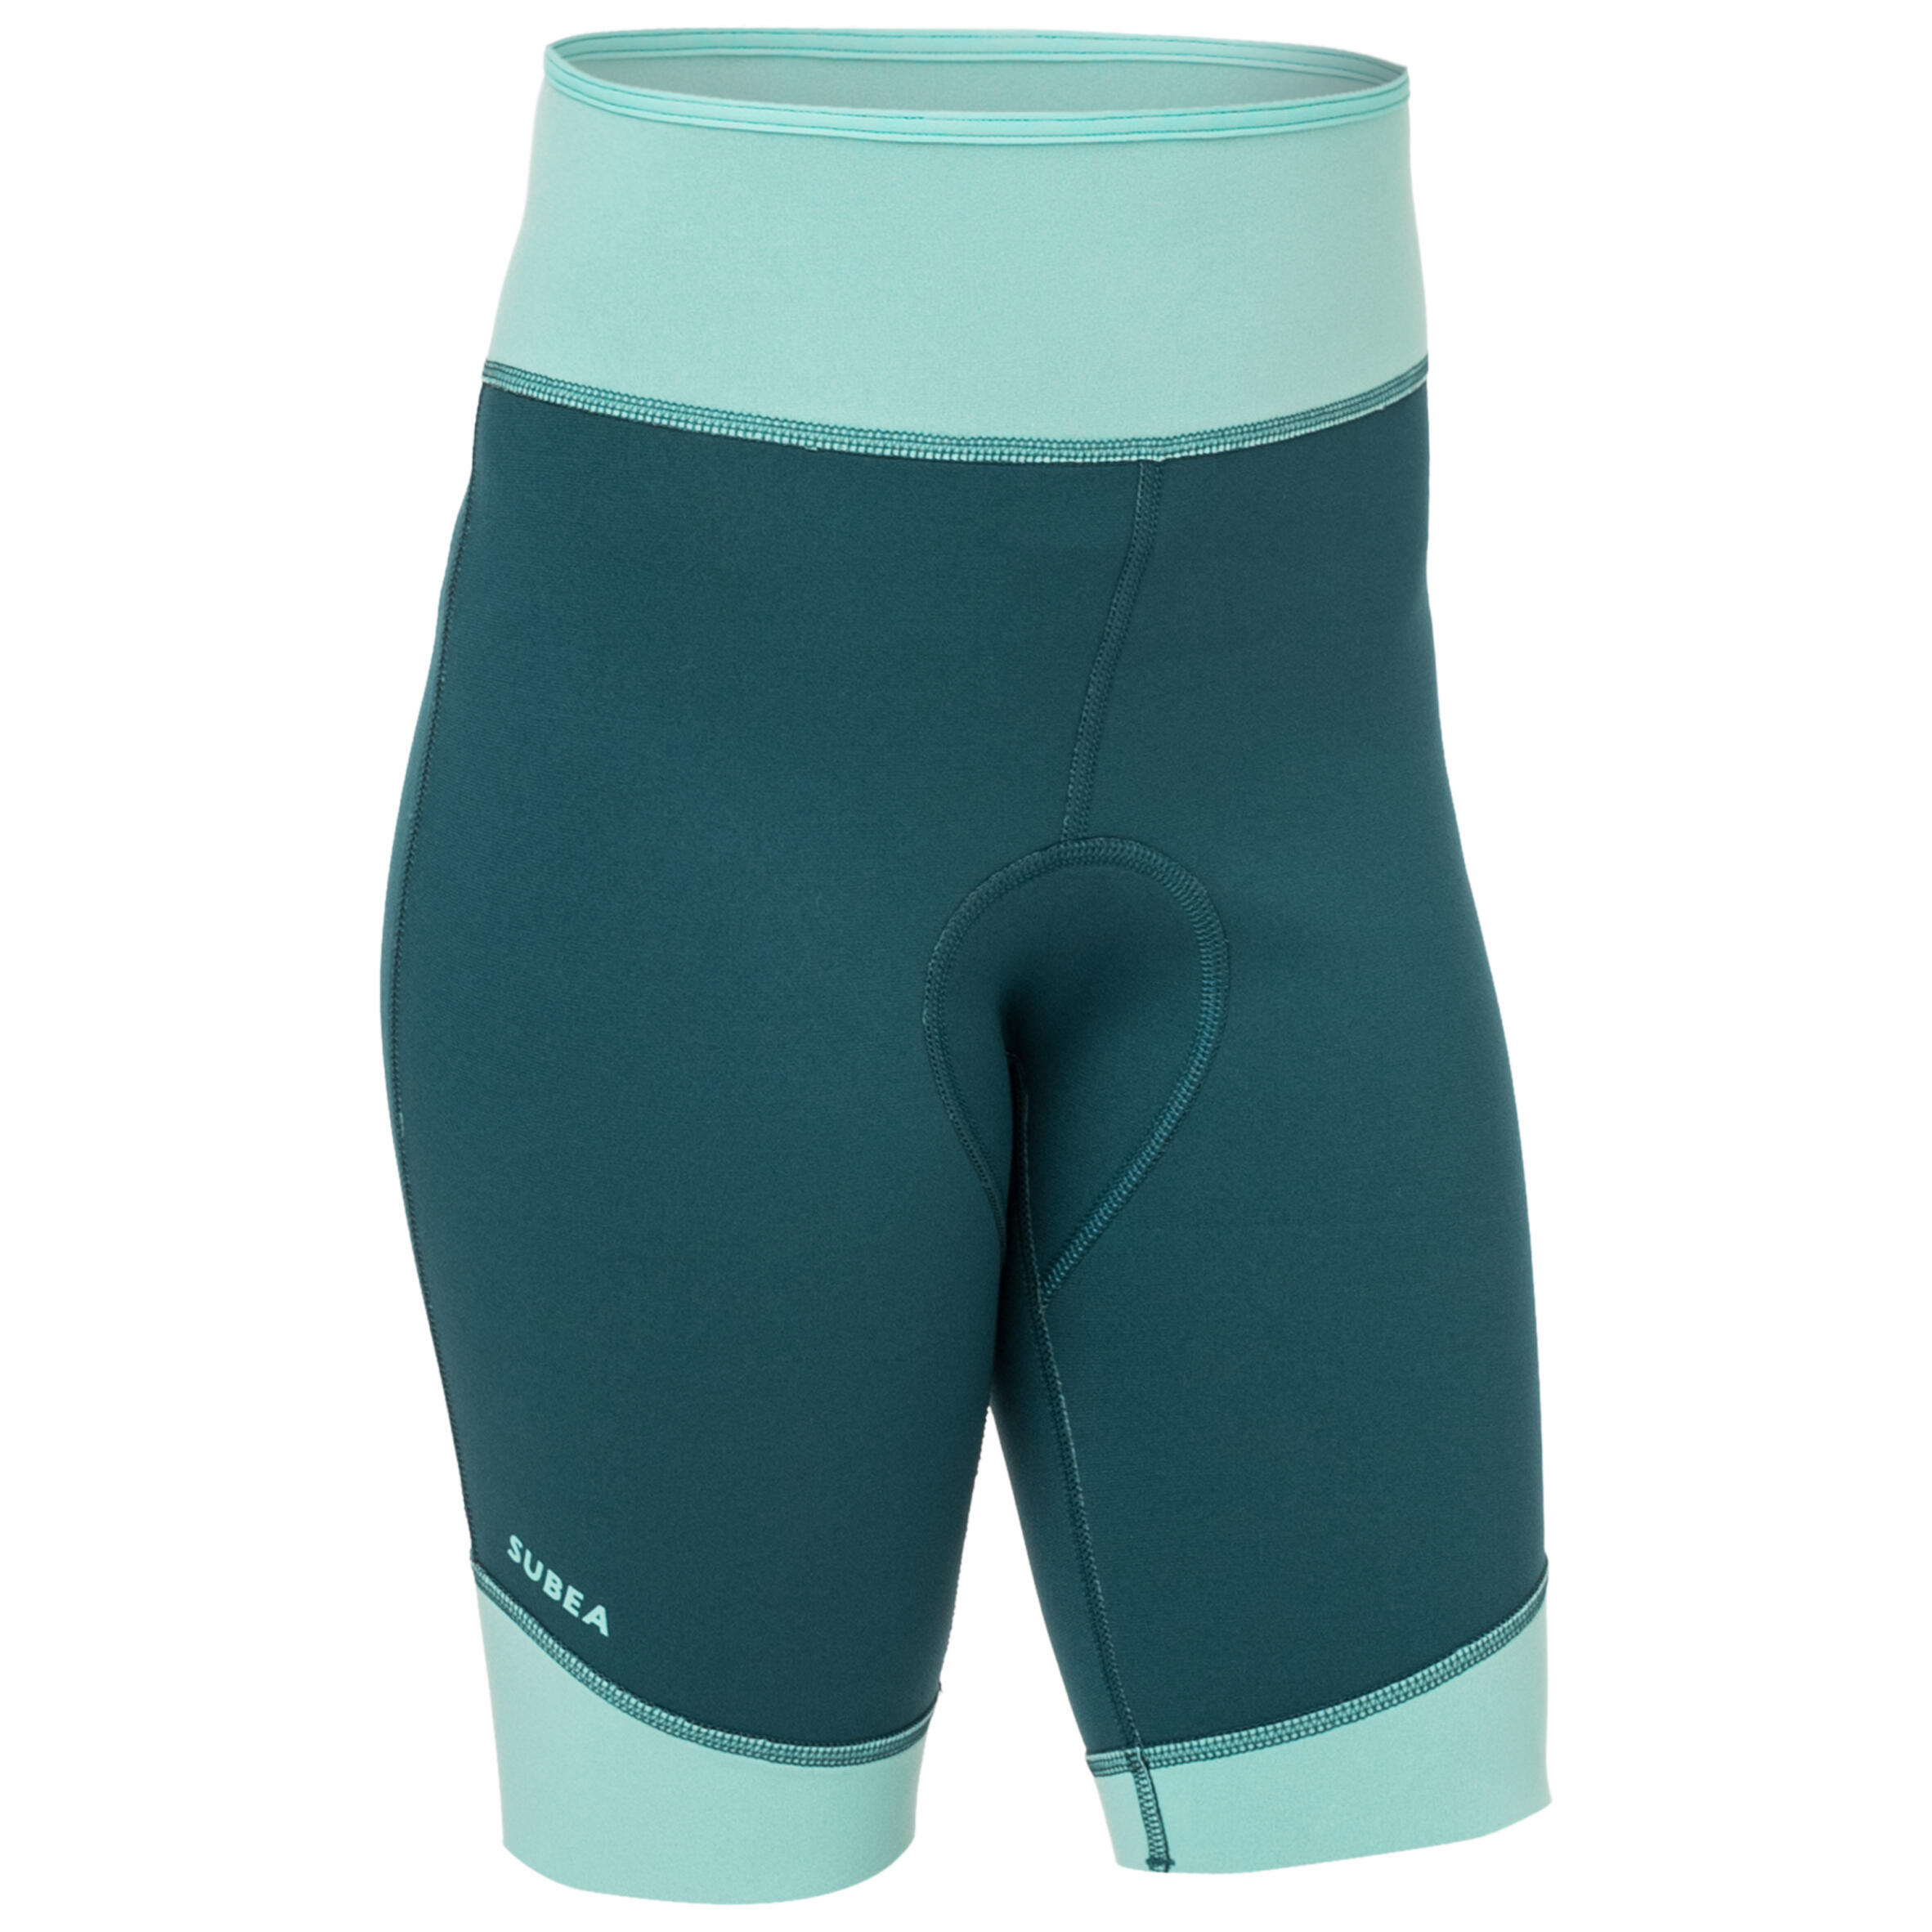 SUBEA Kids shorts 1.5 mm neoprene blue